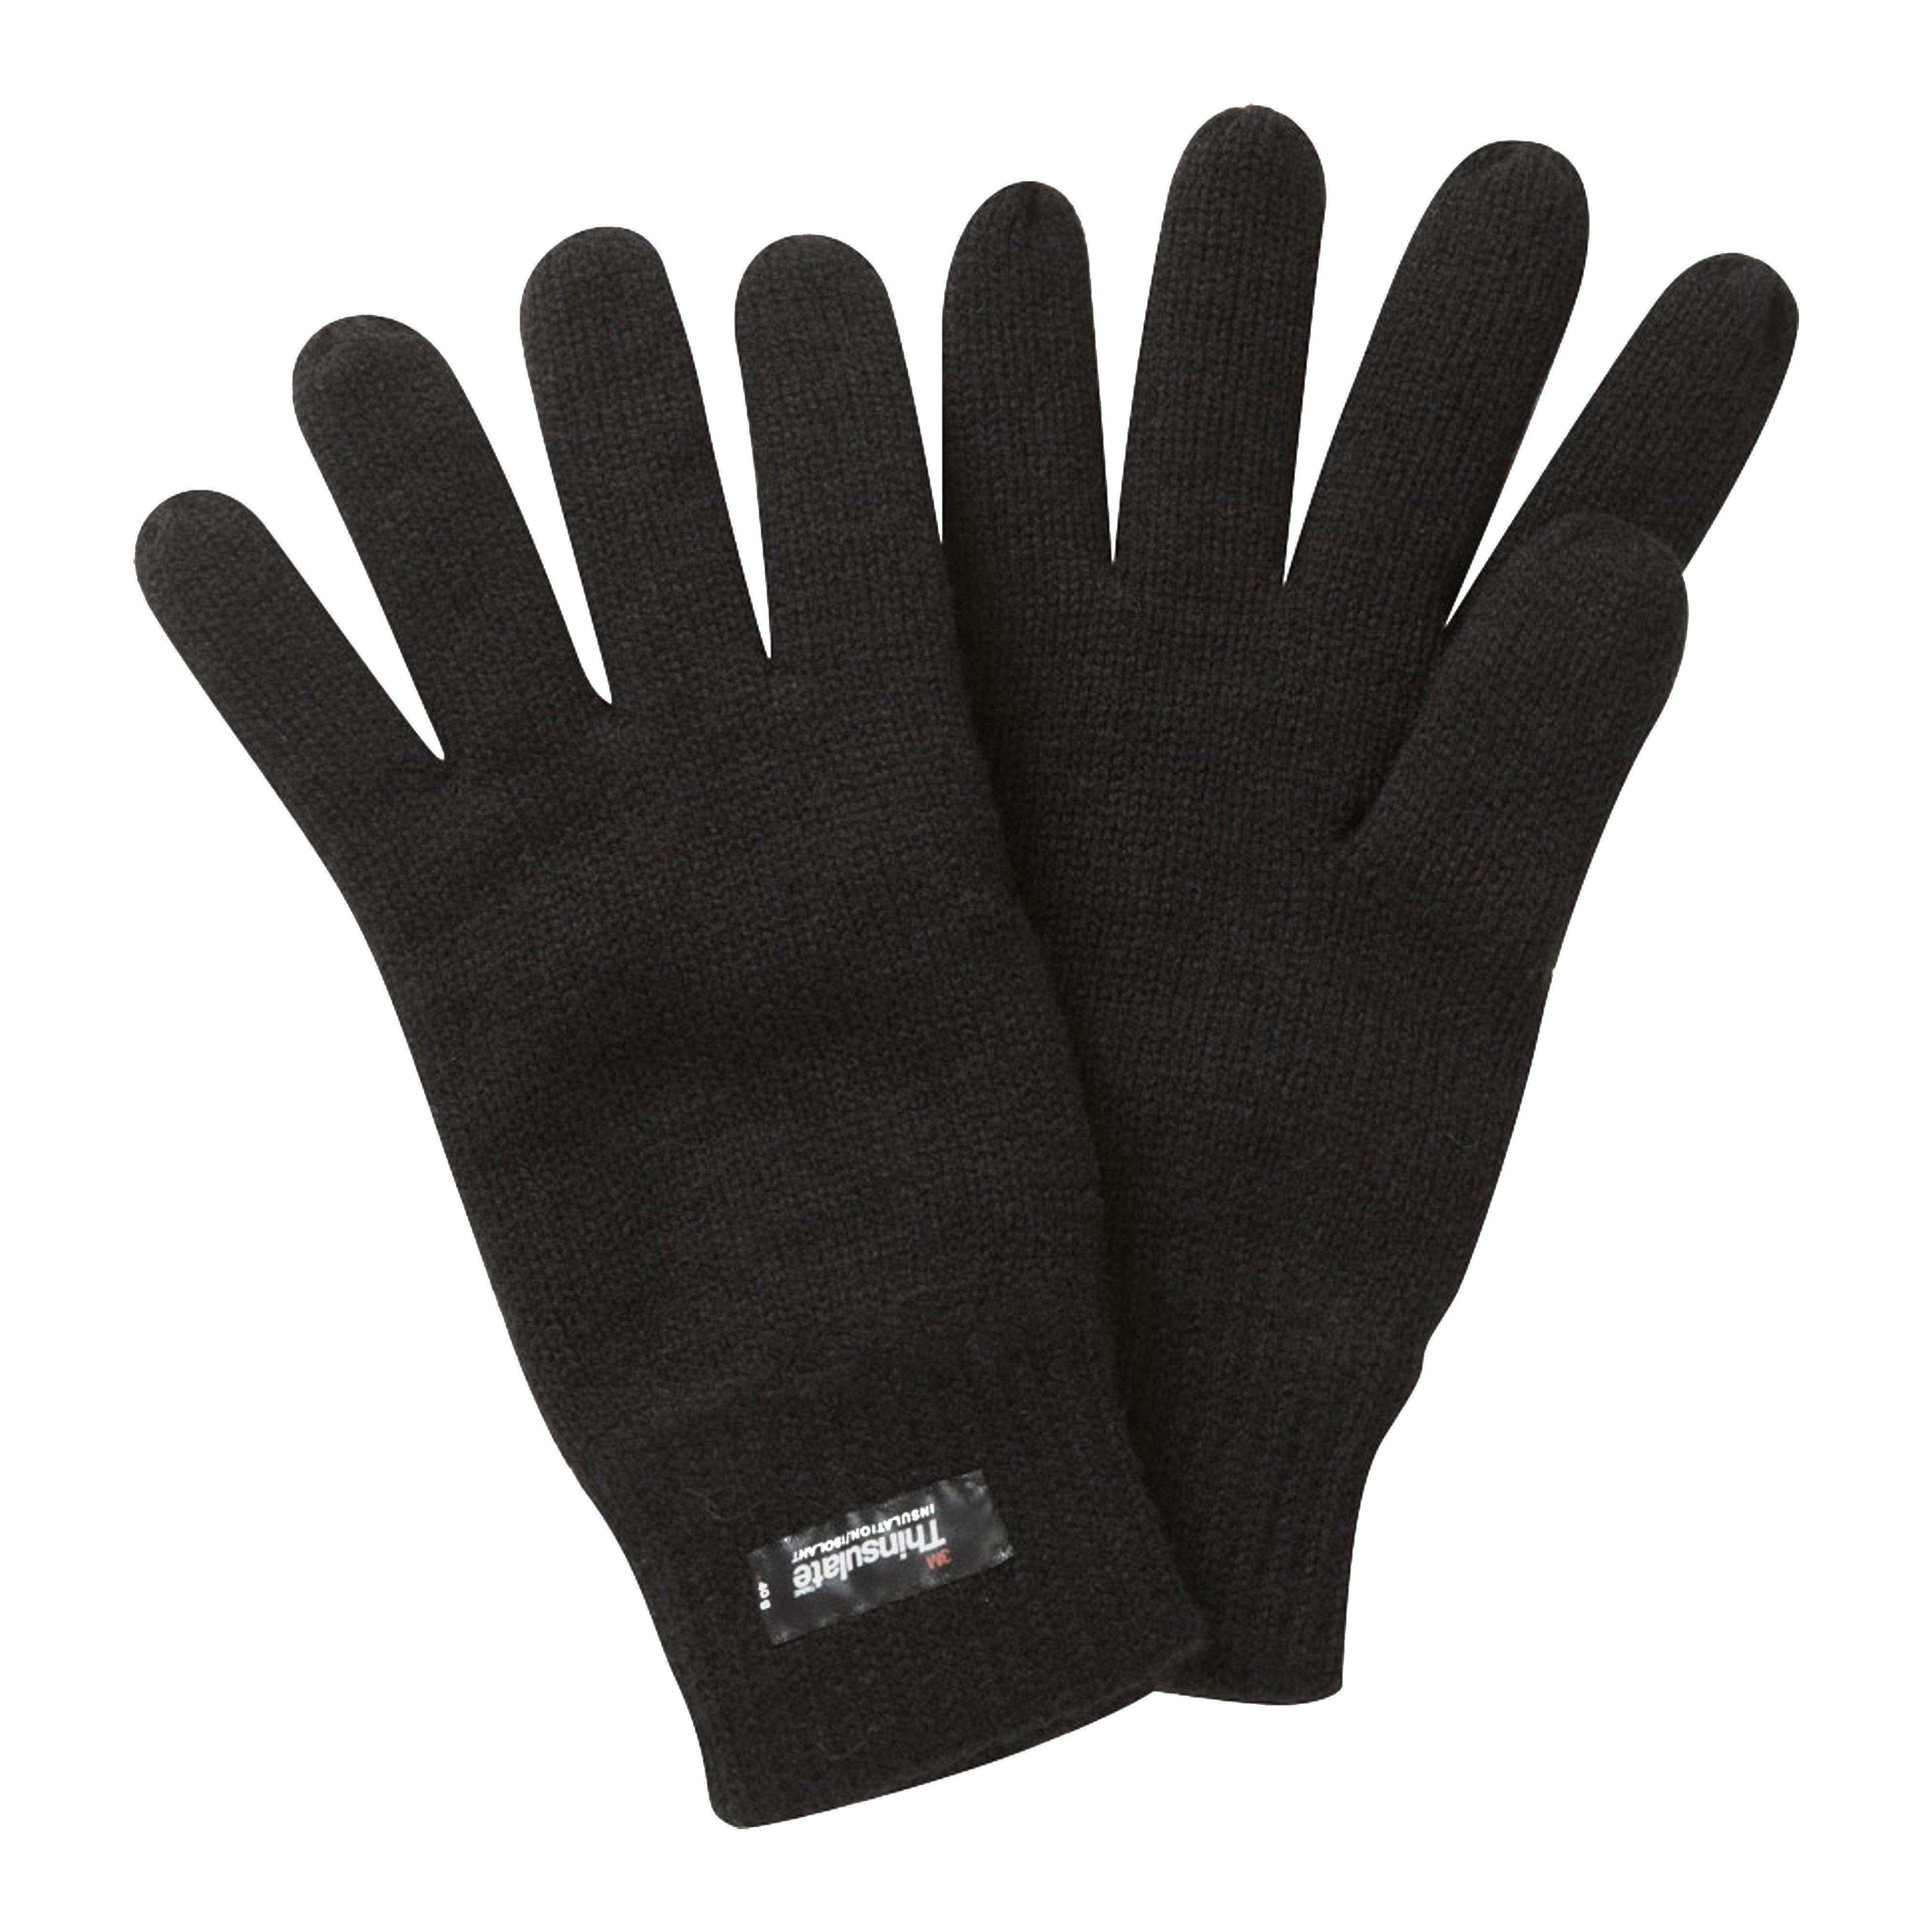 Hi-Gear Men's Acrylic Thinsulate Glove Review